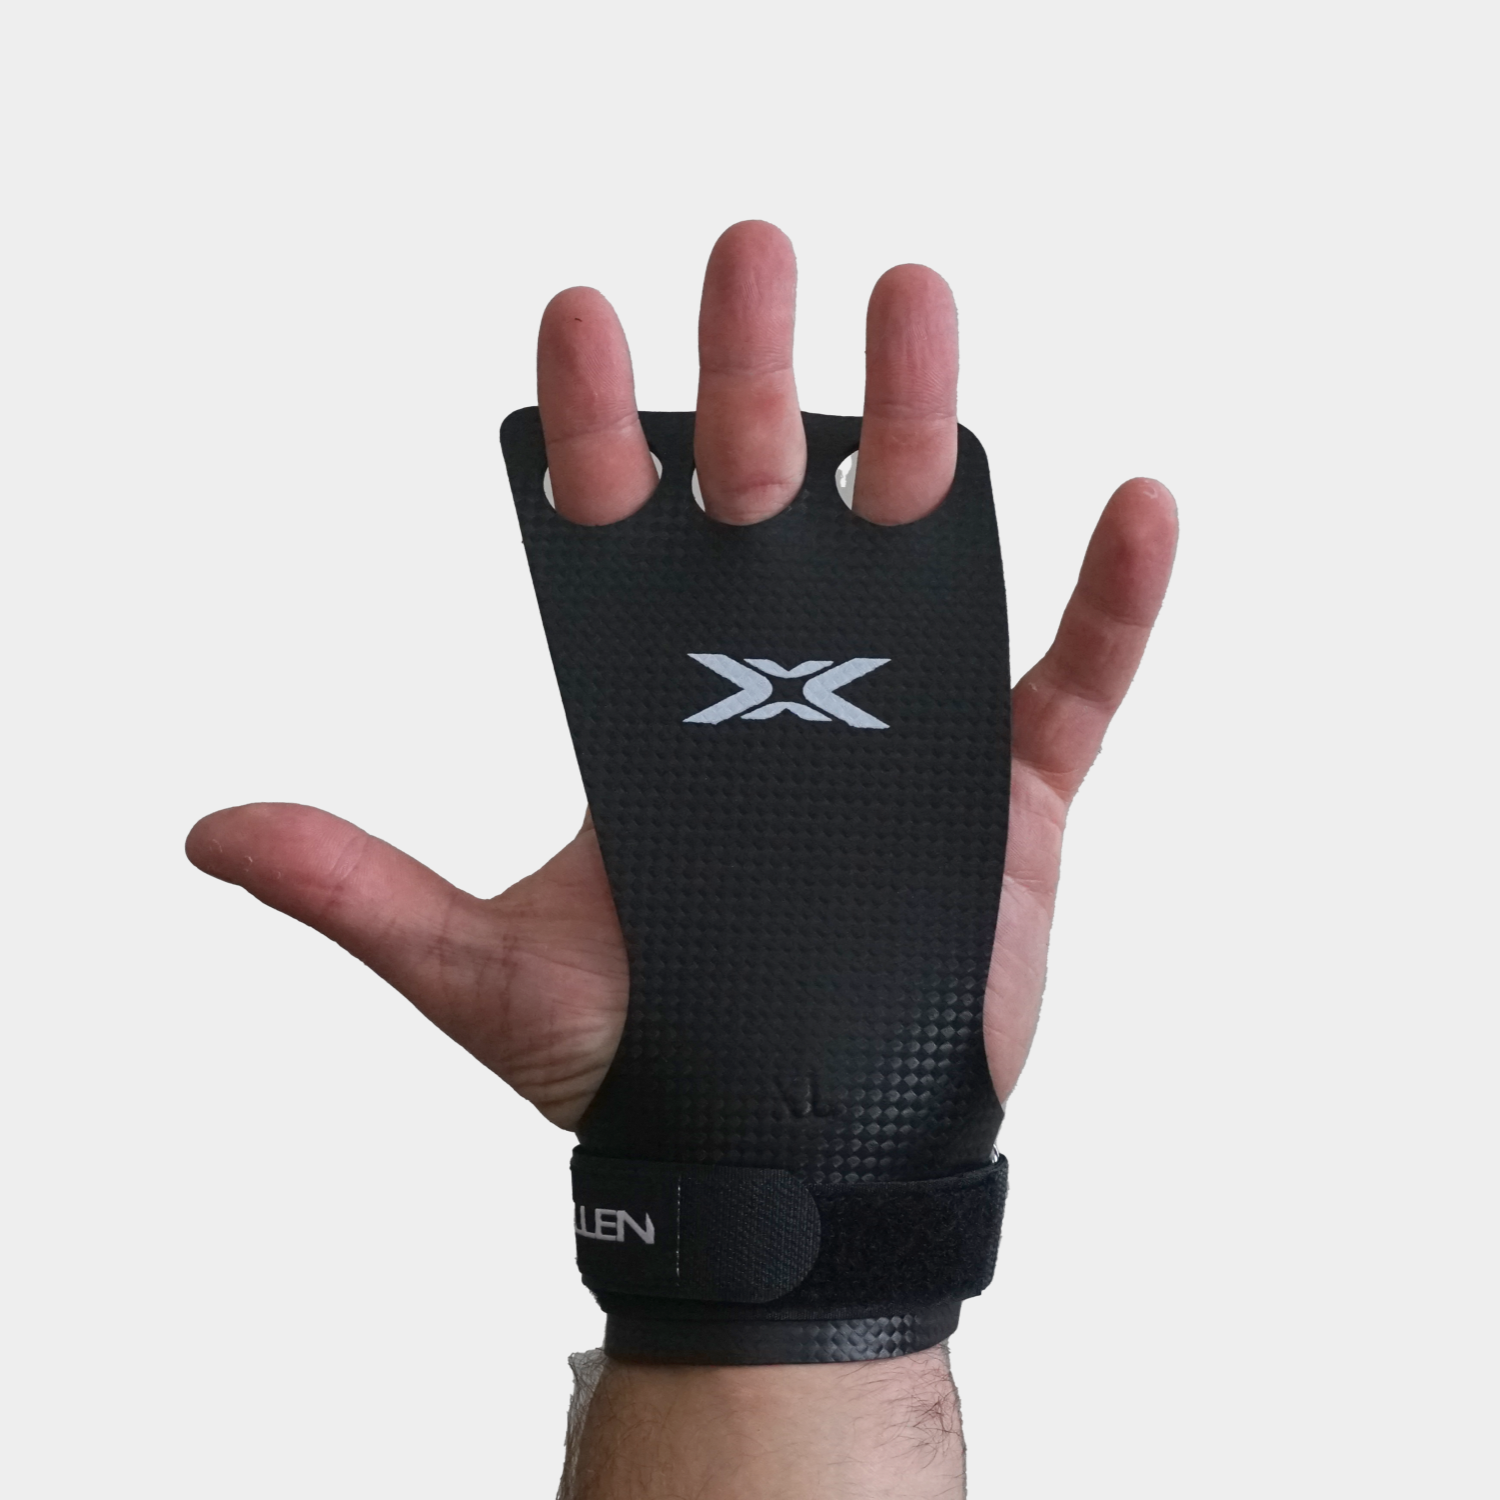 Reyllen Gecko Carbon X2 3-hole CrossFit Gymnastic Hand Grips - worn on hand single